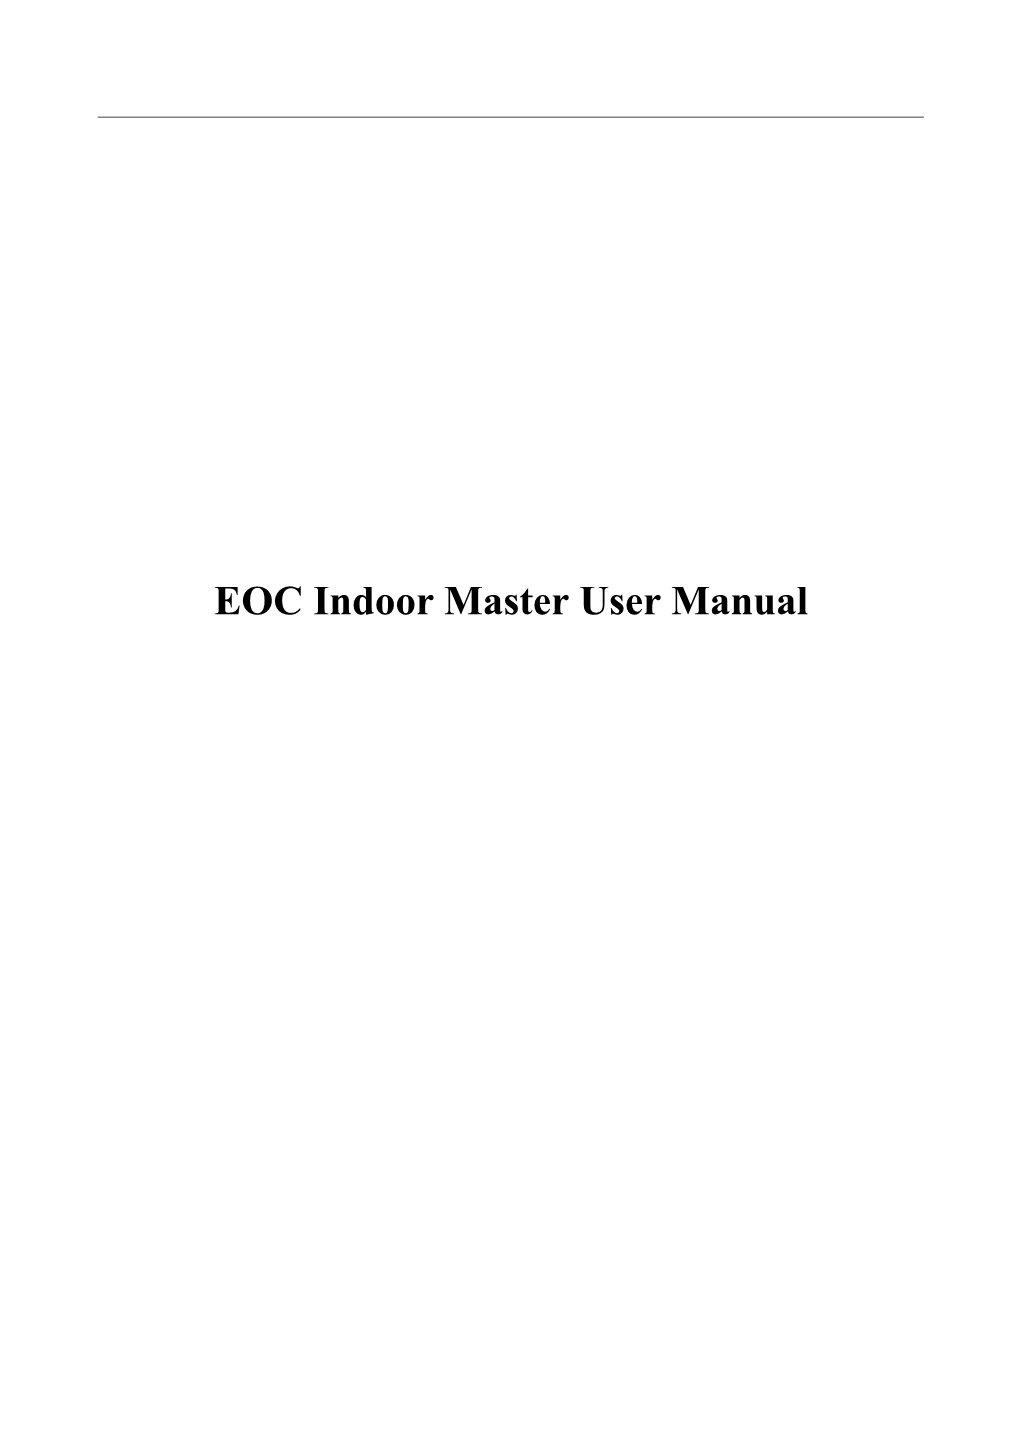 EOC Indoor Master User Manual